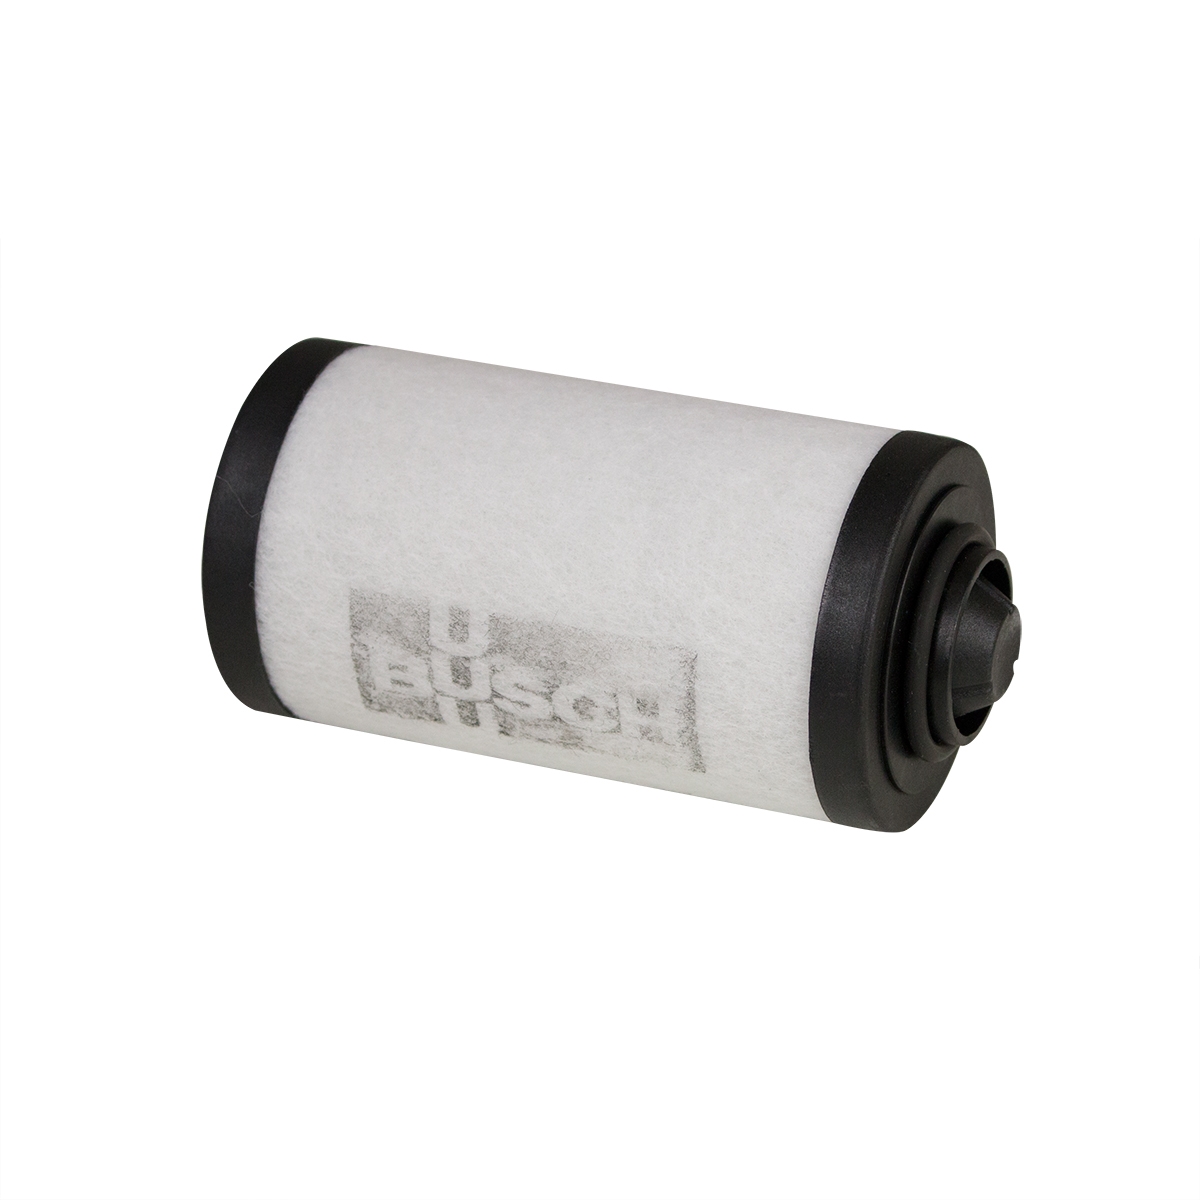 Exhaust Filter for Ultravac 225-250-400 Chamber Vacuum Sealer 884361